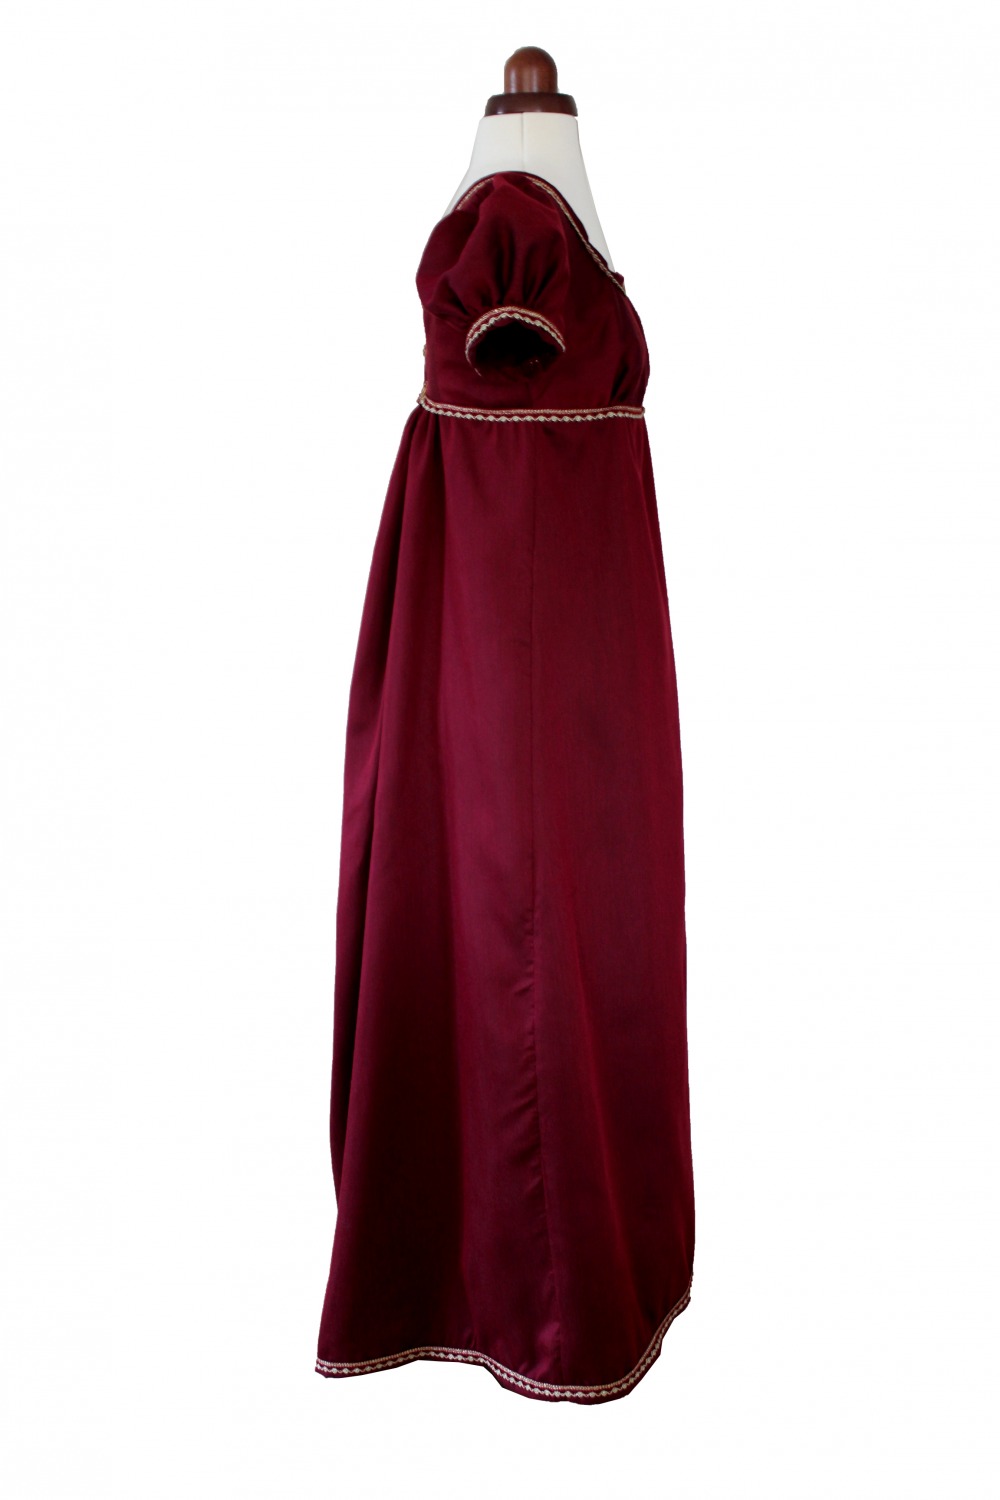 Ladies 18th 19th Century Regency Jane Austen Costume Size 12 - 14 Image